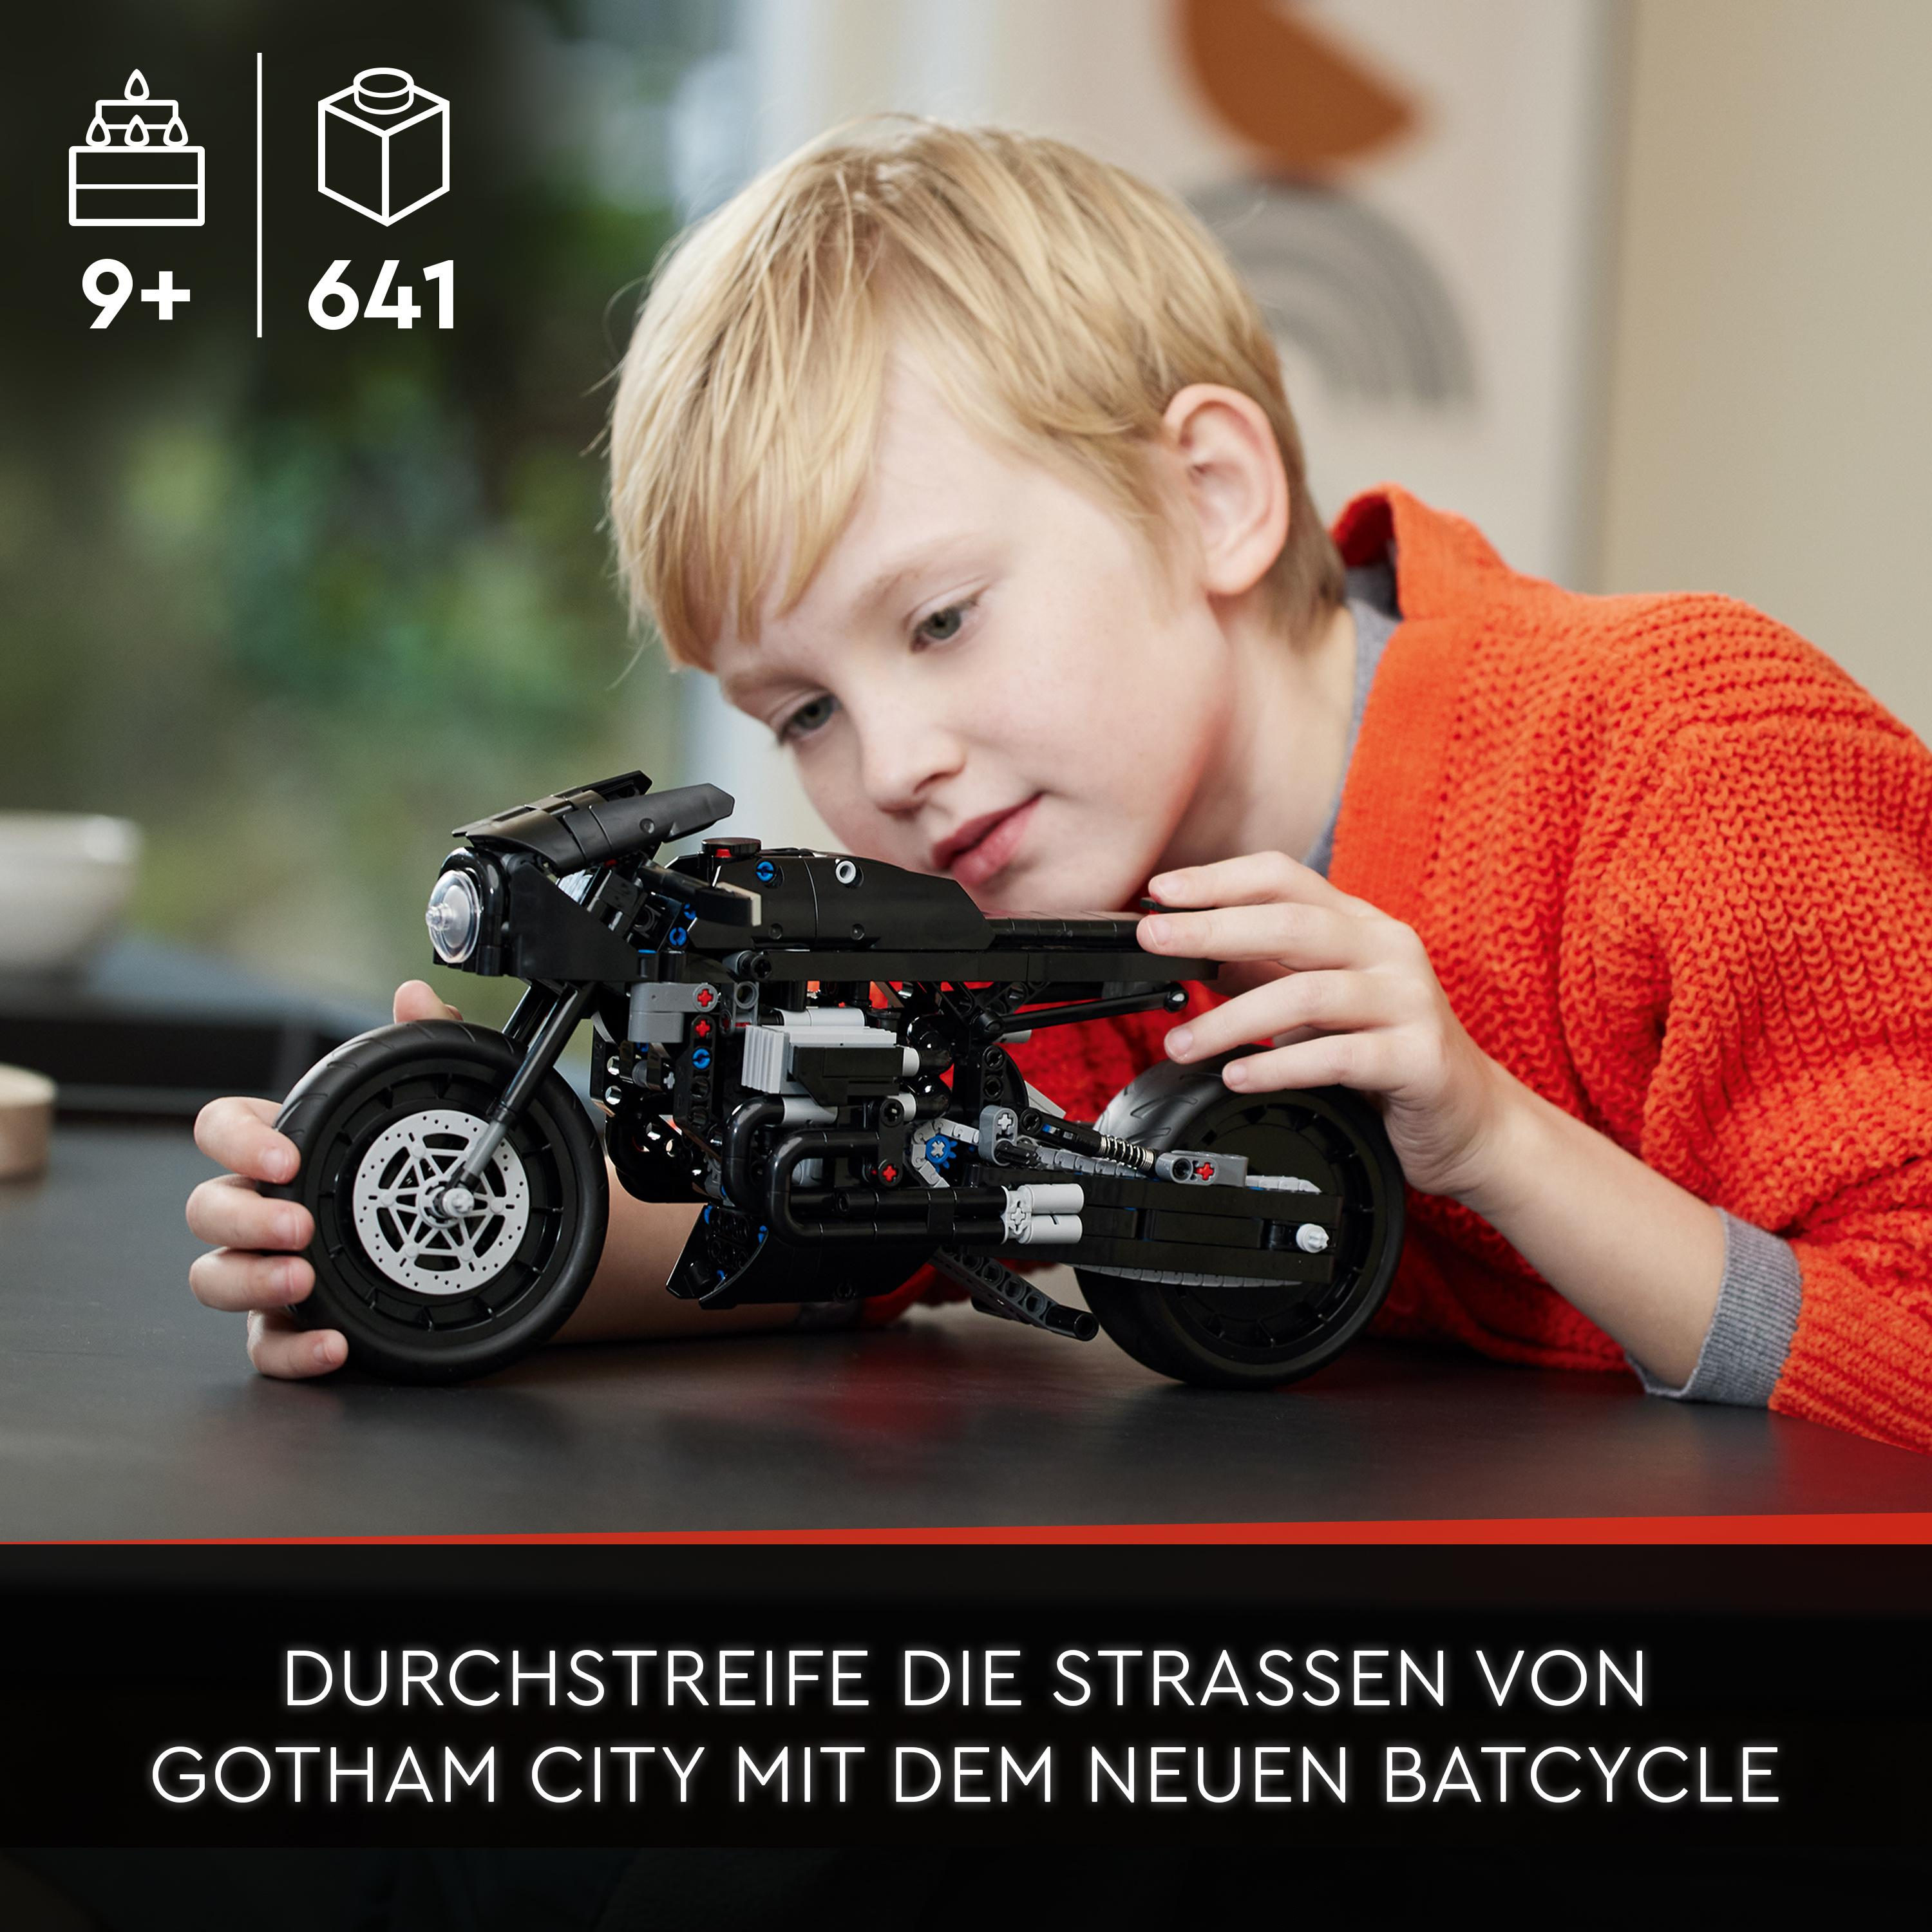 THE 42155 BATCYCLE Mehrfarbig – Bausatz, Technic BATMAN LEGO